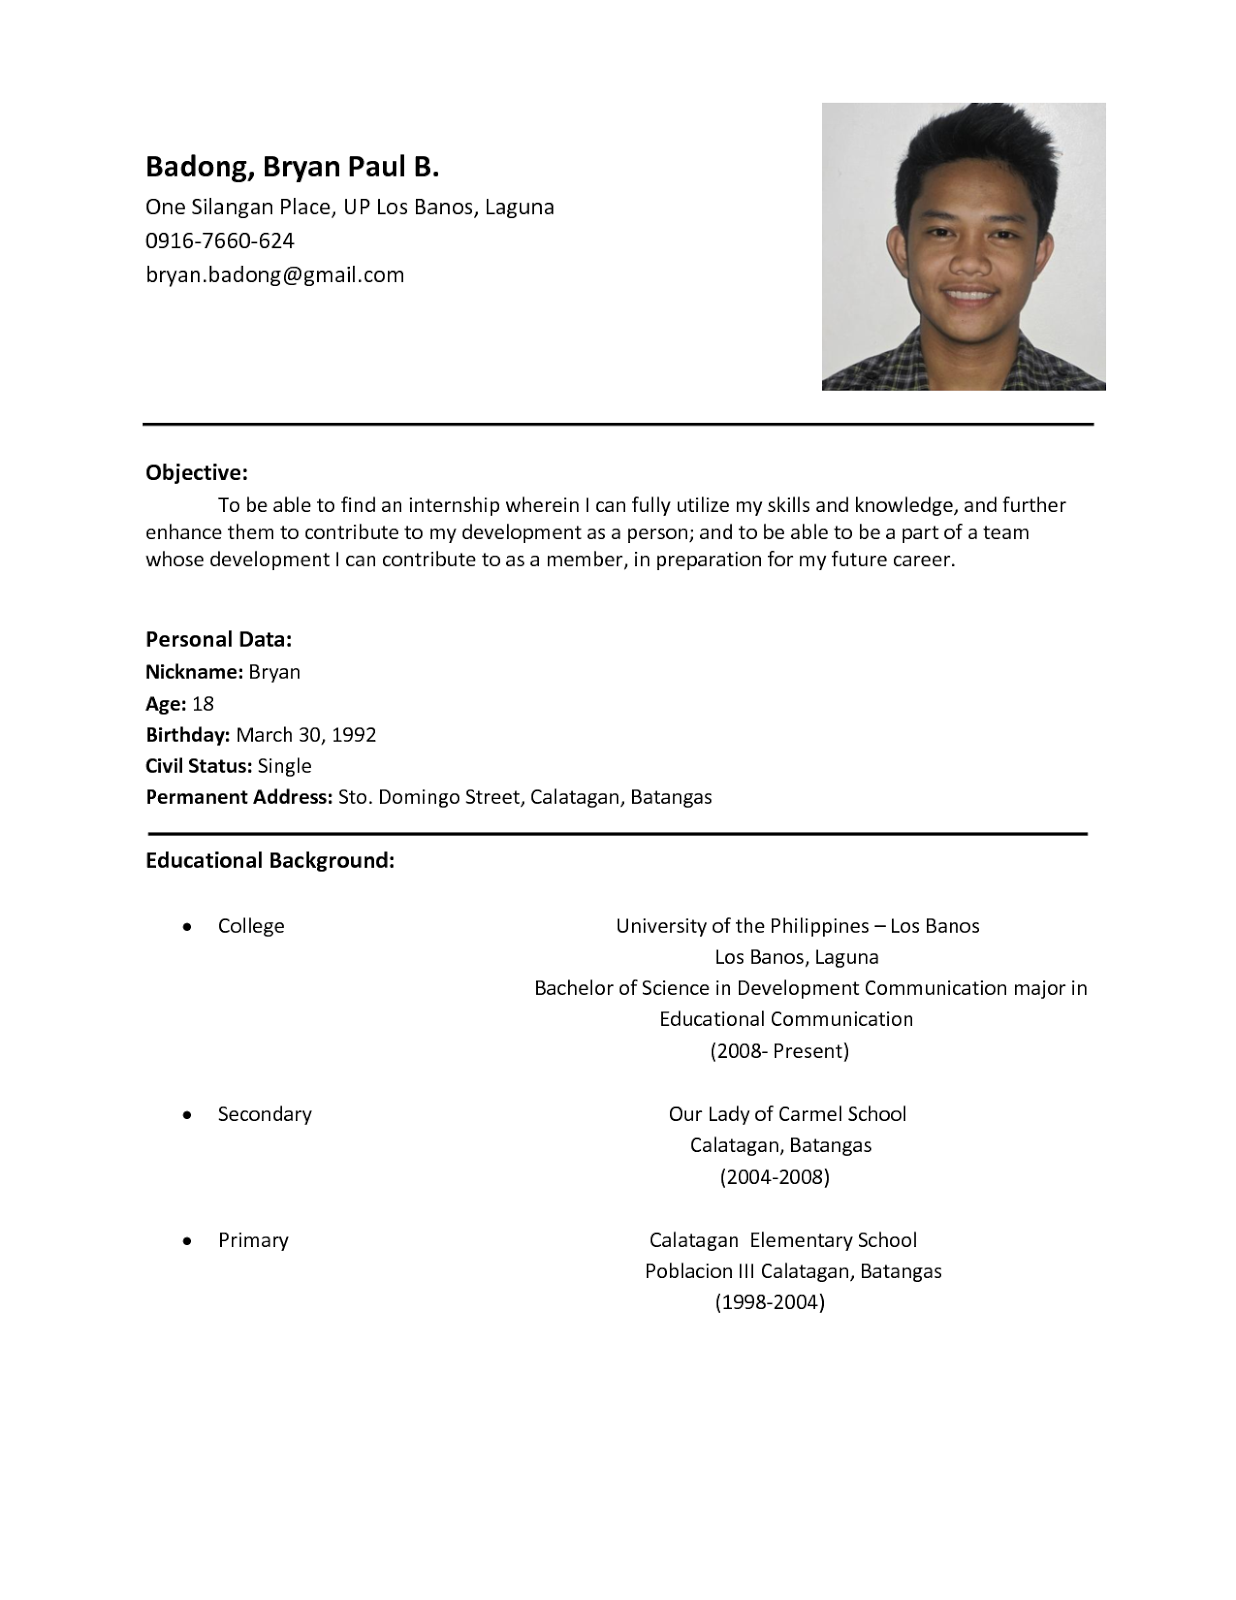 Sample of s resume